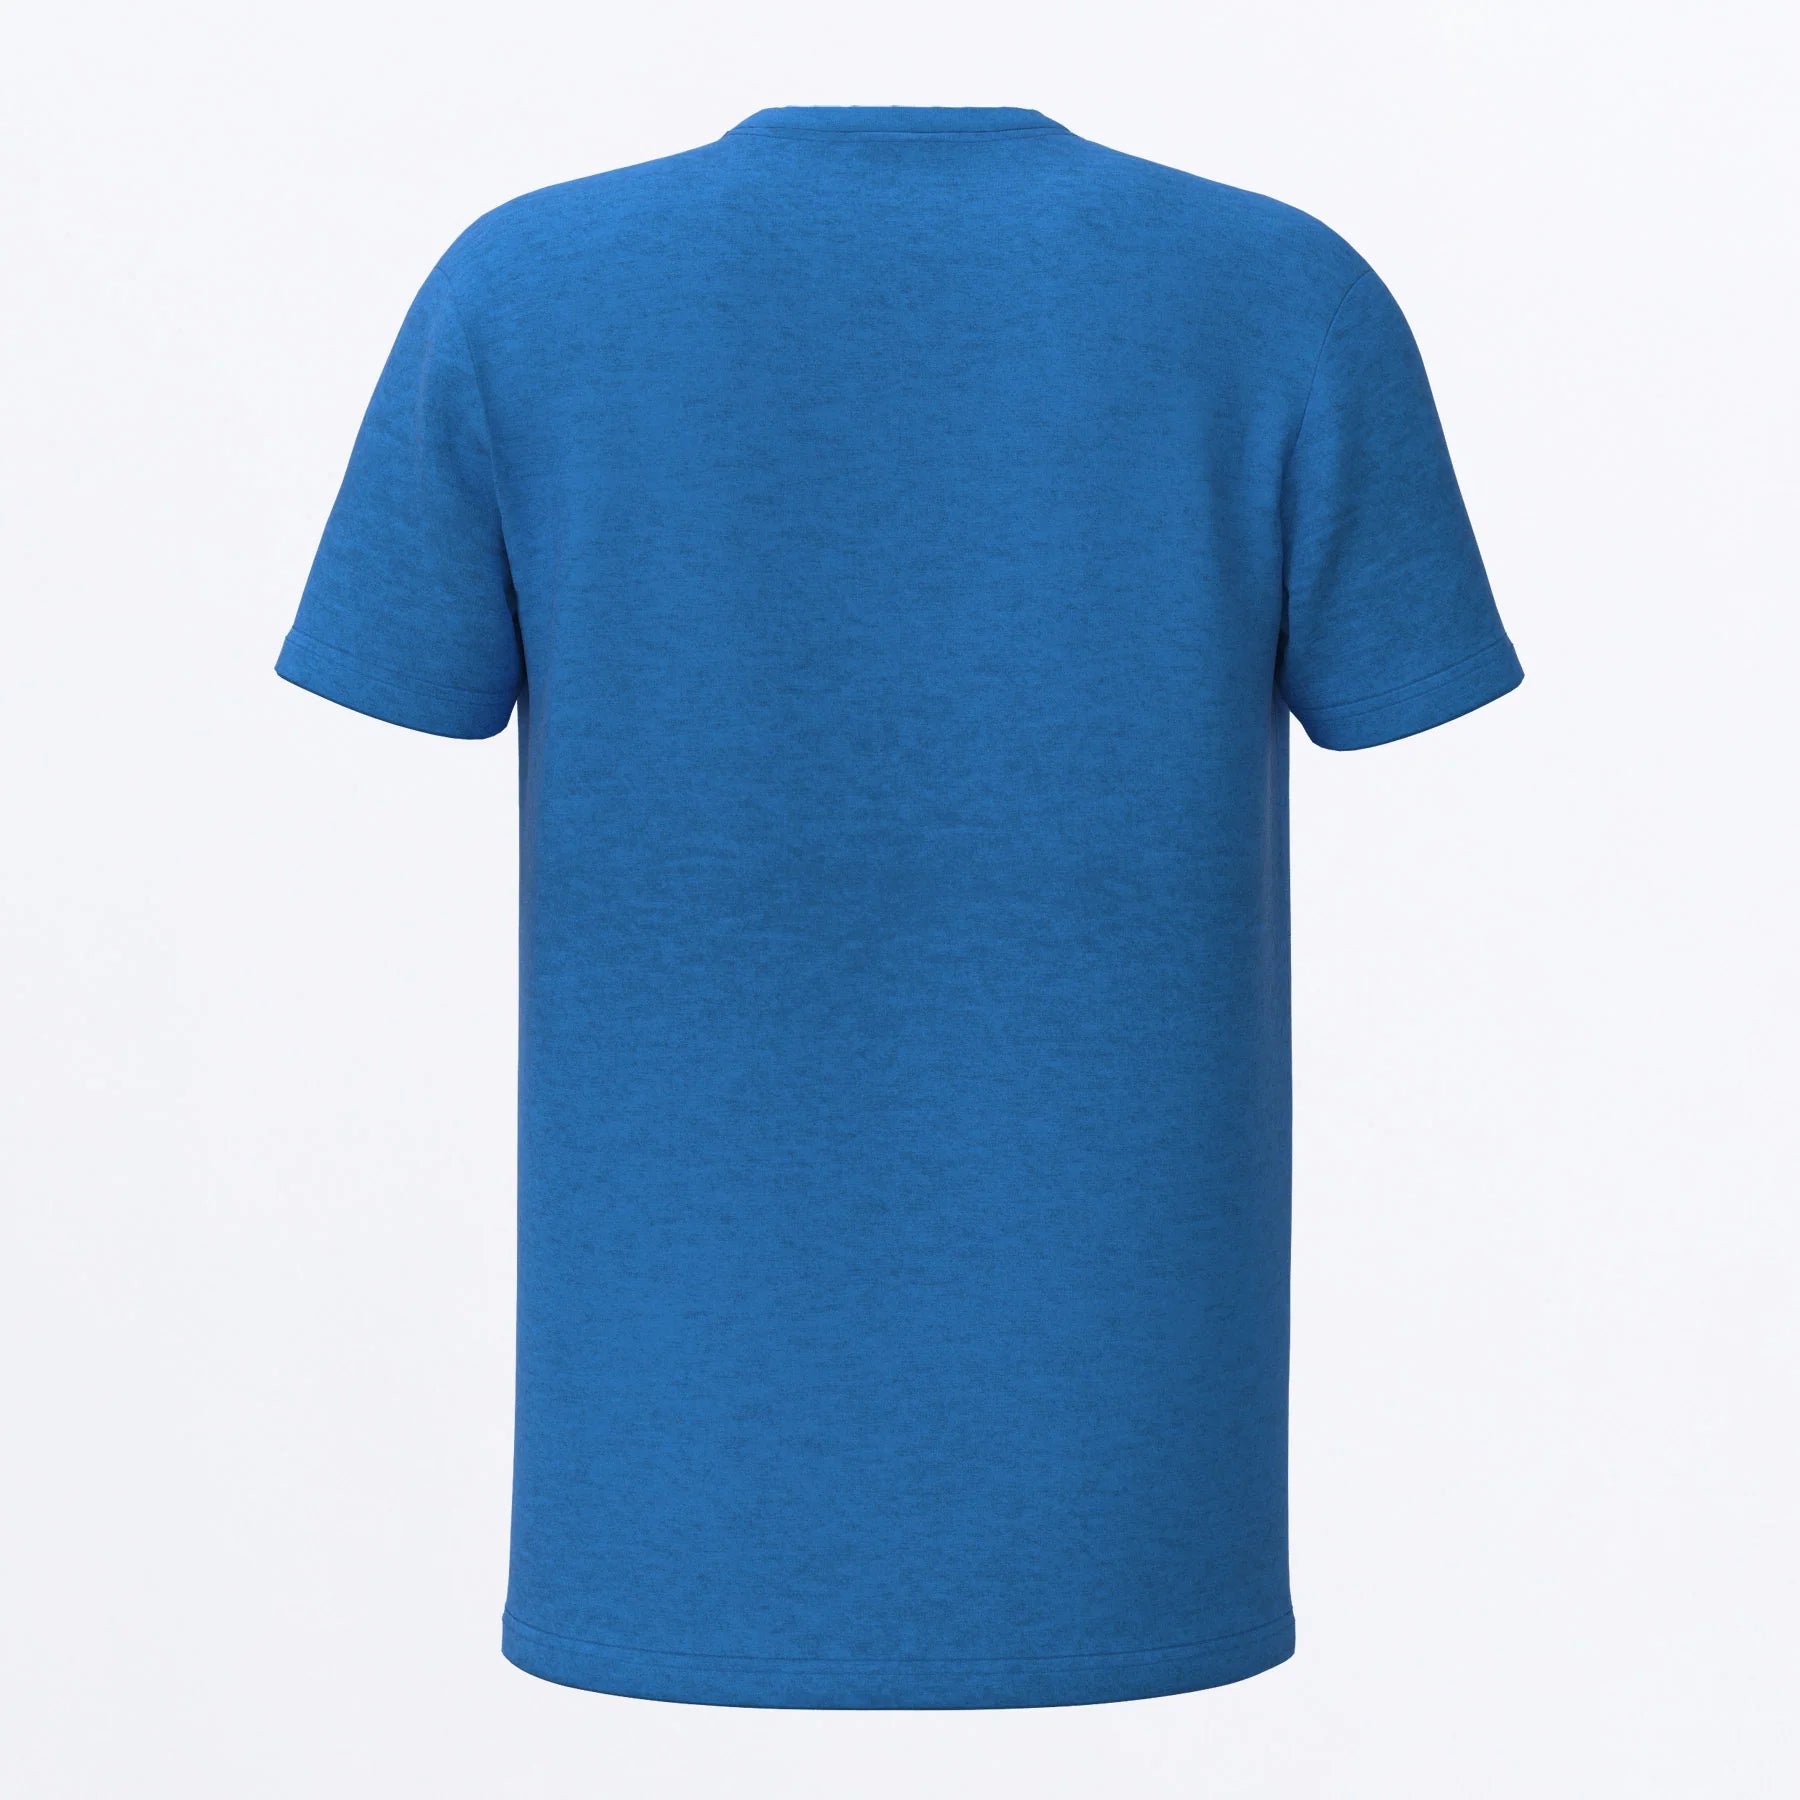 FTA Full Throttle Premium T-Shirt Blue